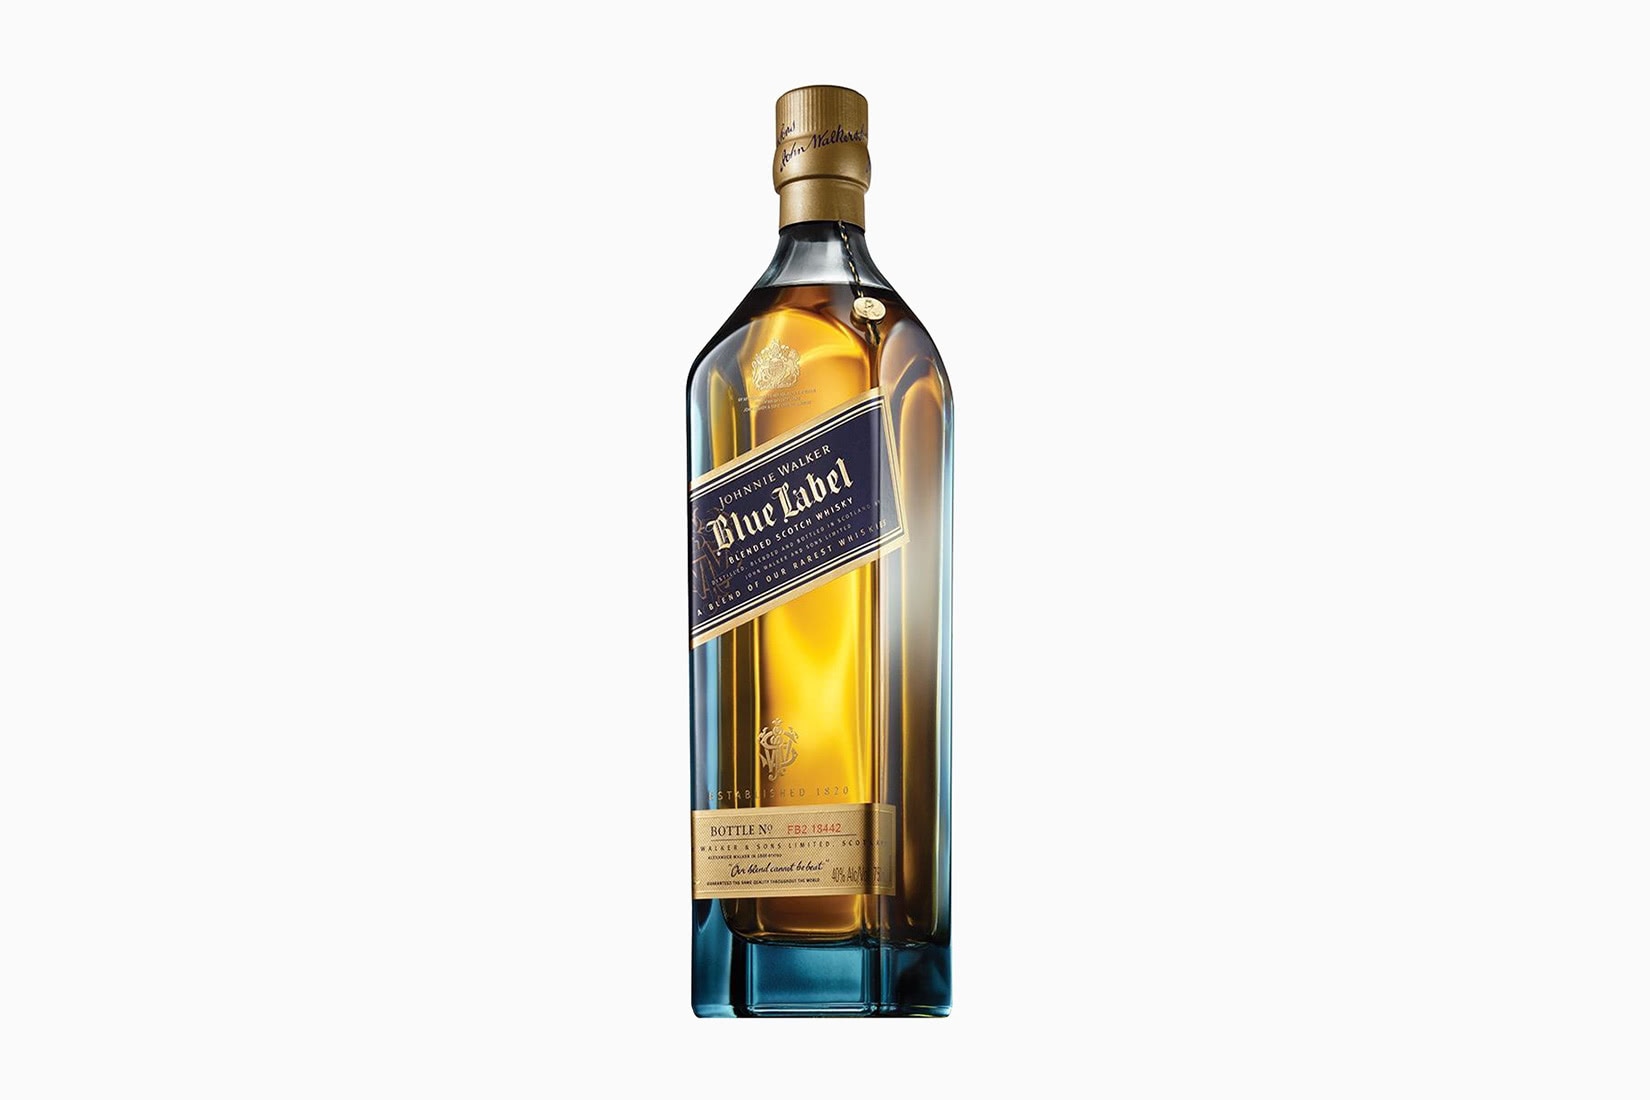  johnnie walker palack ár méret whisky-Luxe digitális